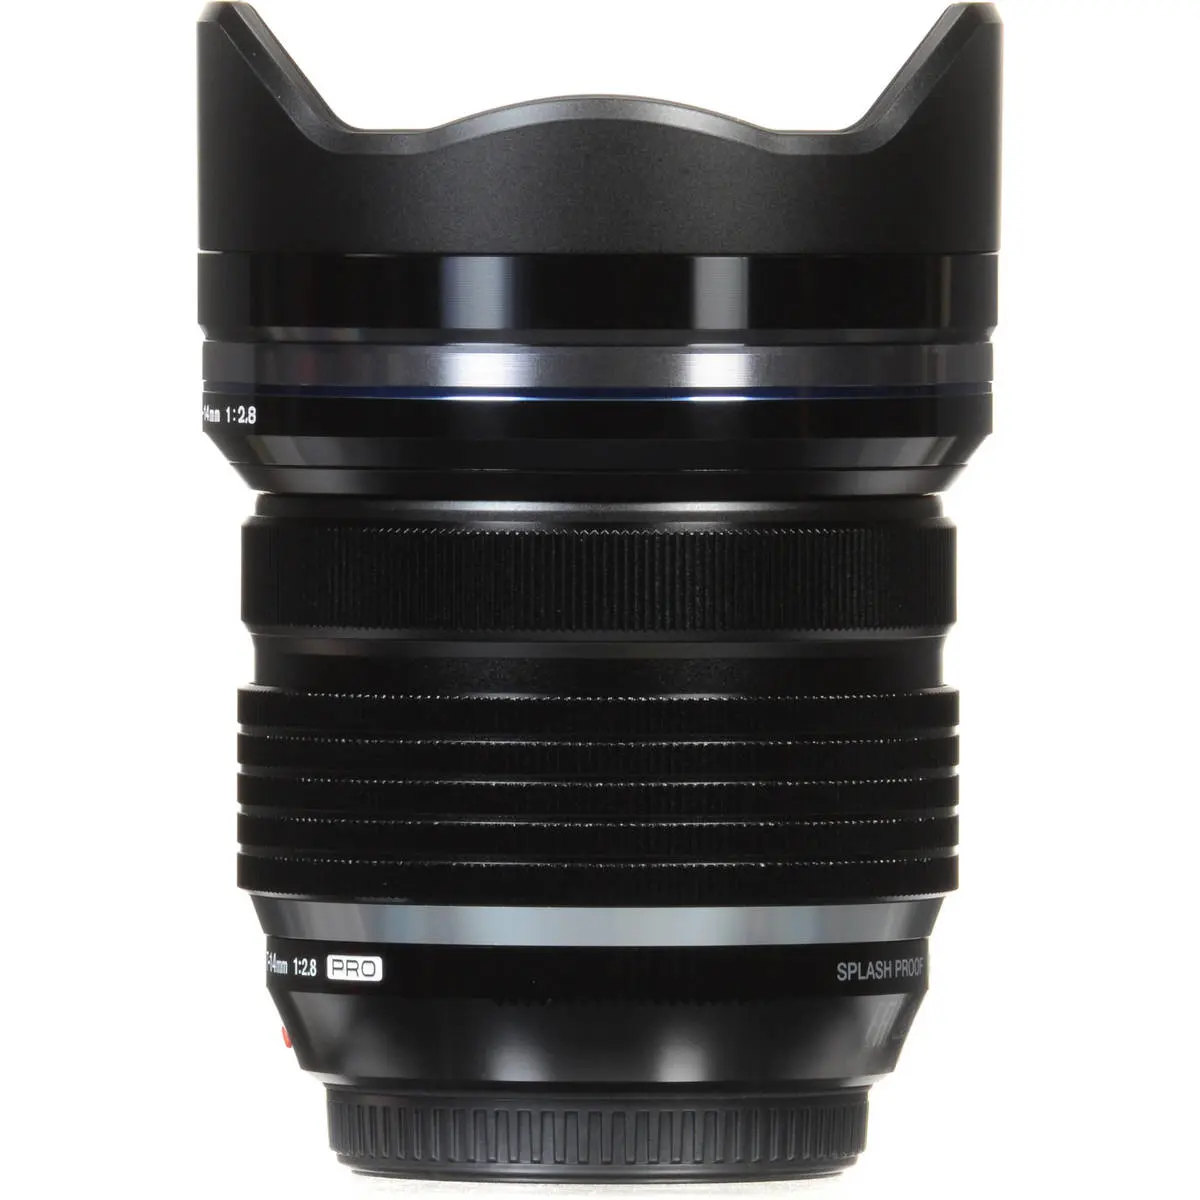 11. Olympus M.ZUIKO DIGITAL ED 7-14mm F2.8 PRO Lens